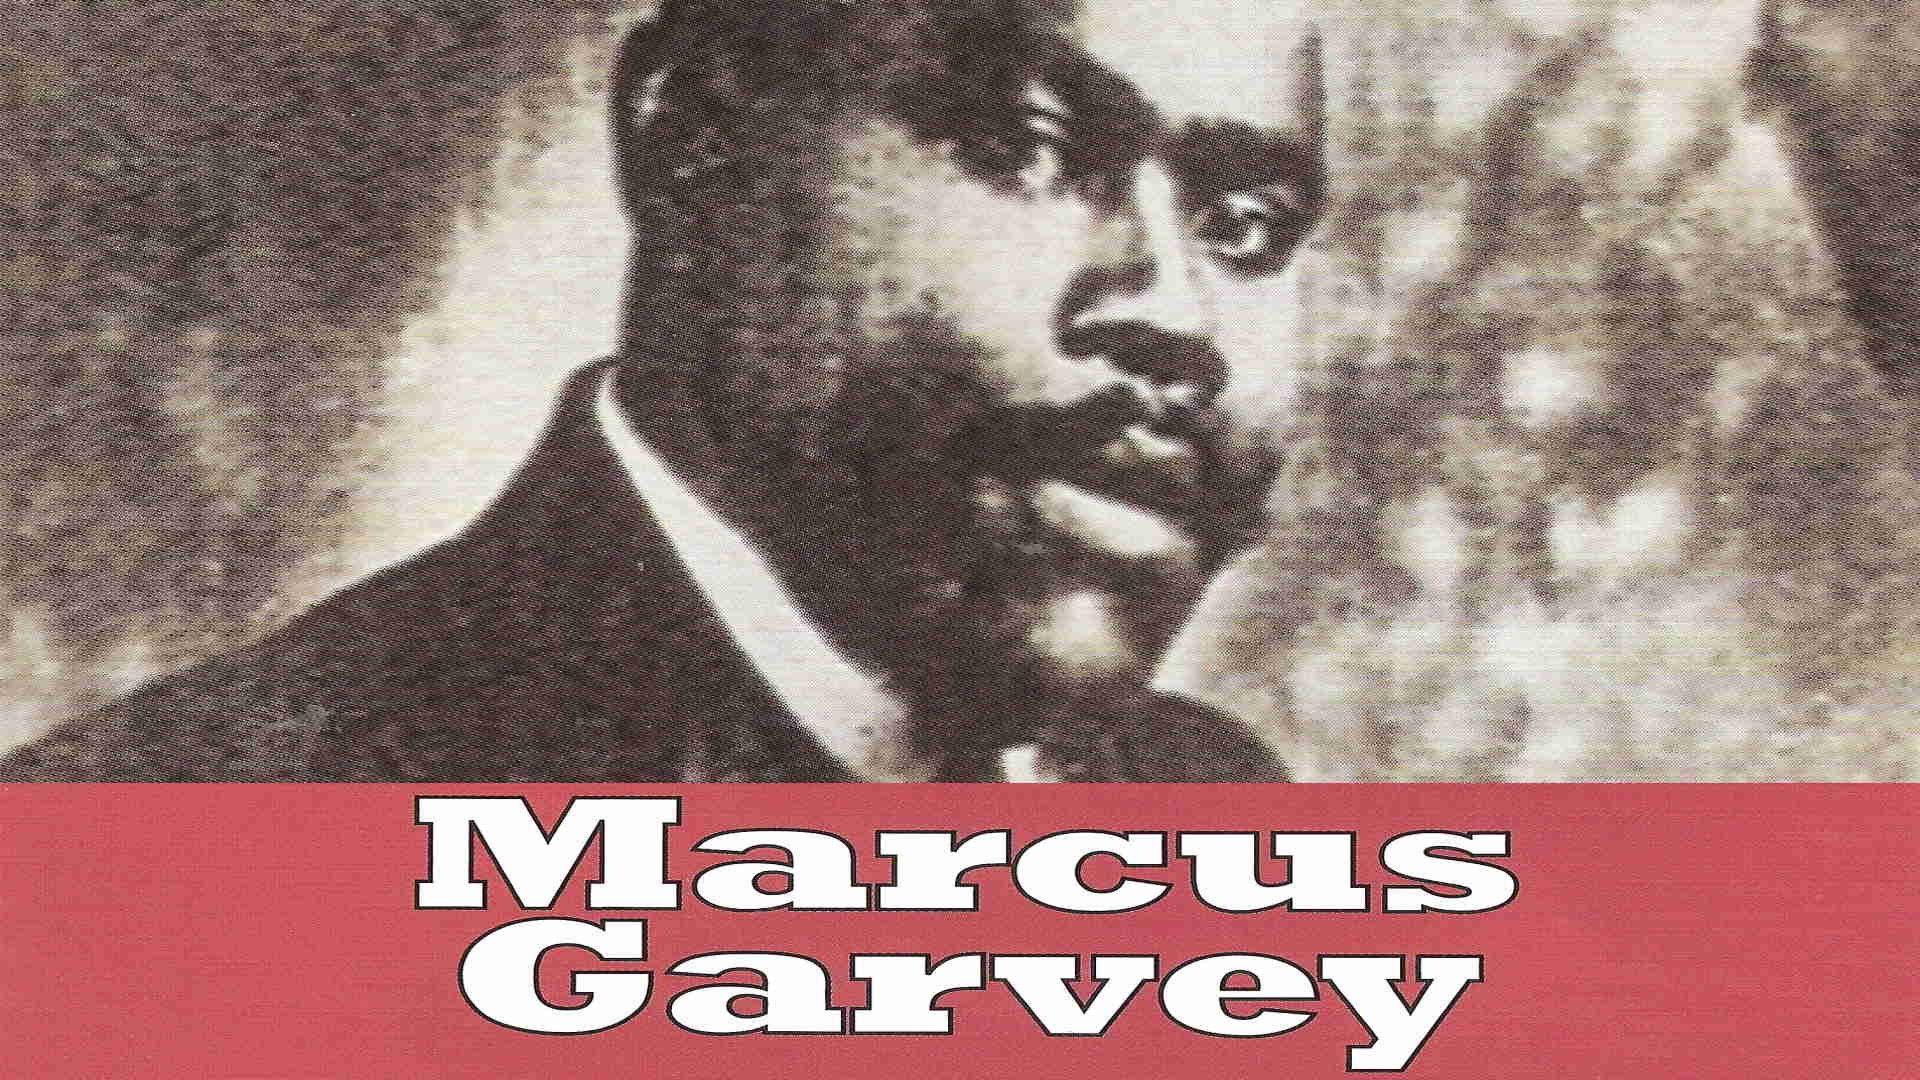 Marcus Garvey: A Giant Of Black Politics